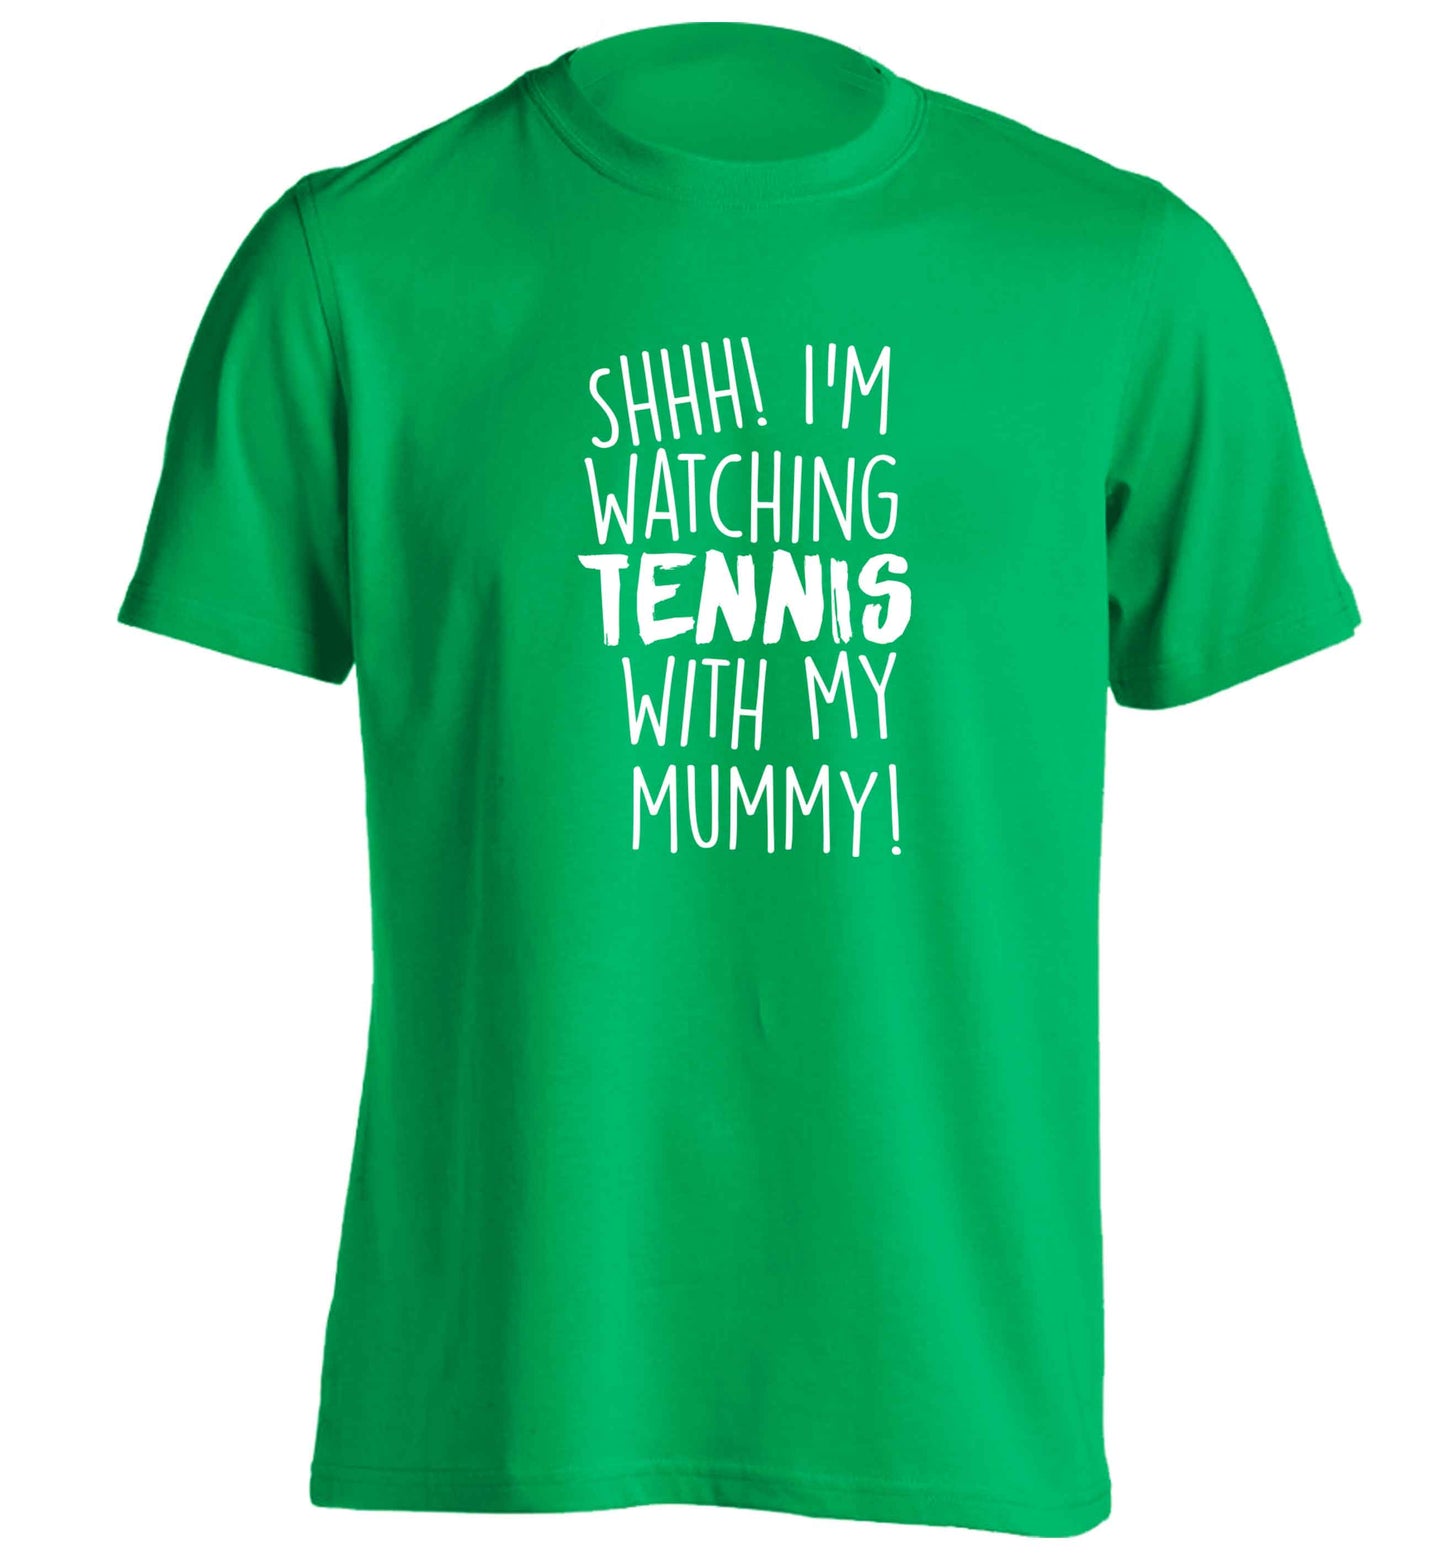 Shh! I'm watching tennis with my mummy! adults unisex green Tshirt 2XL